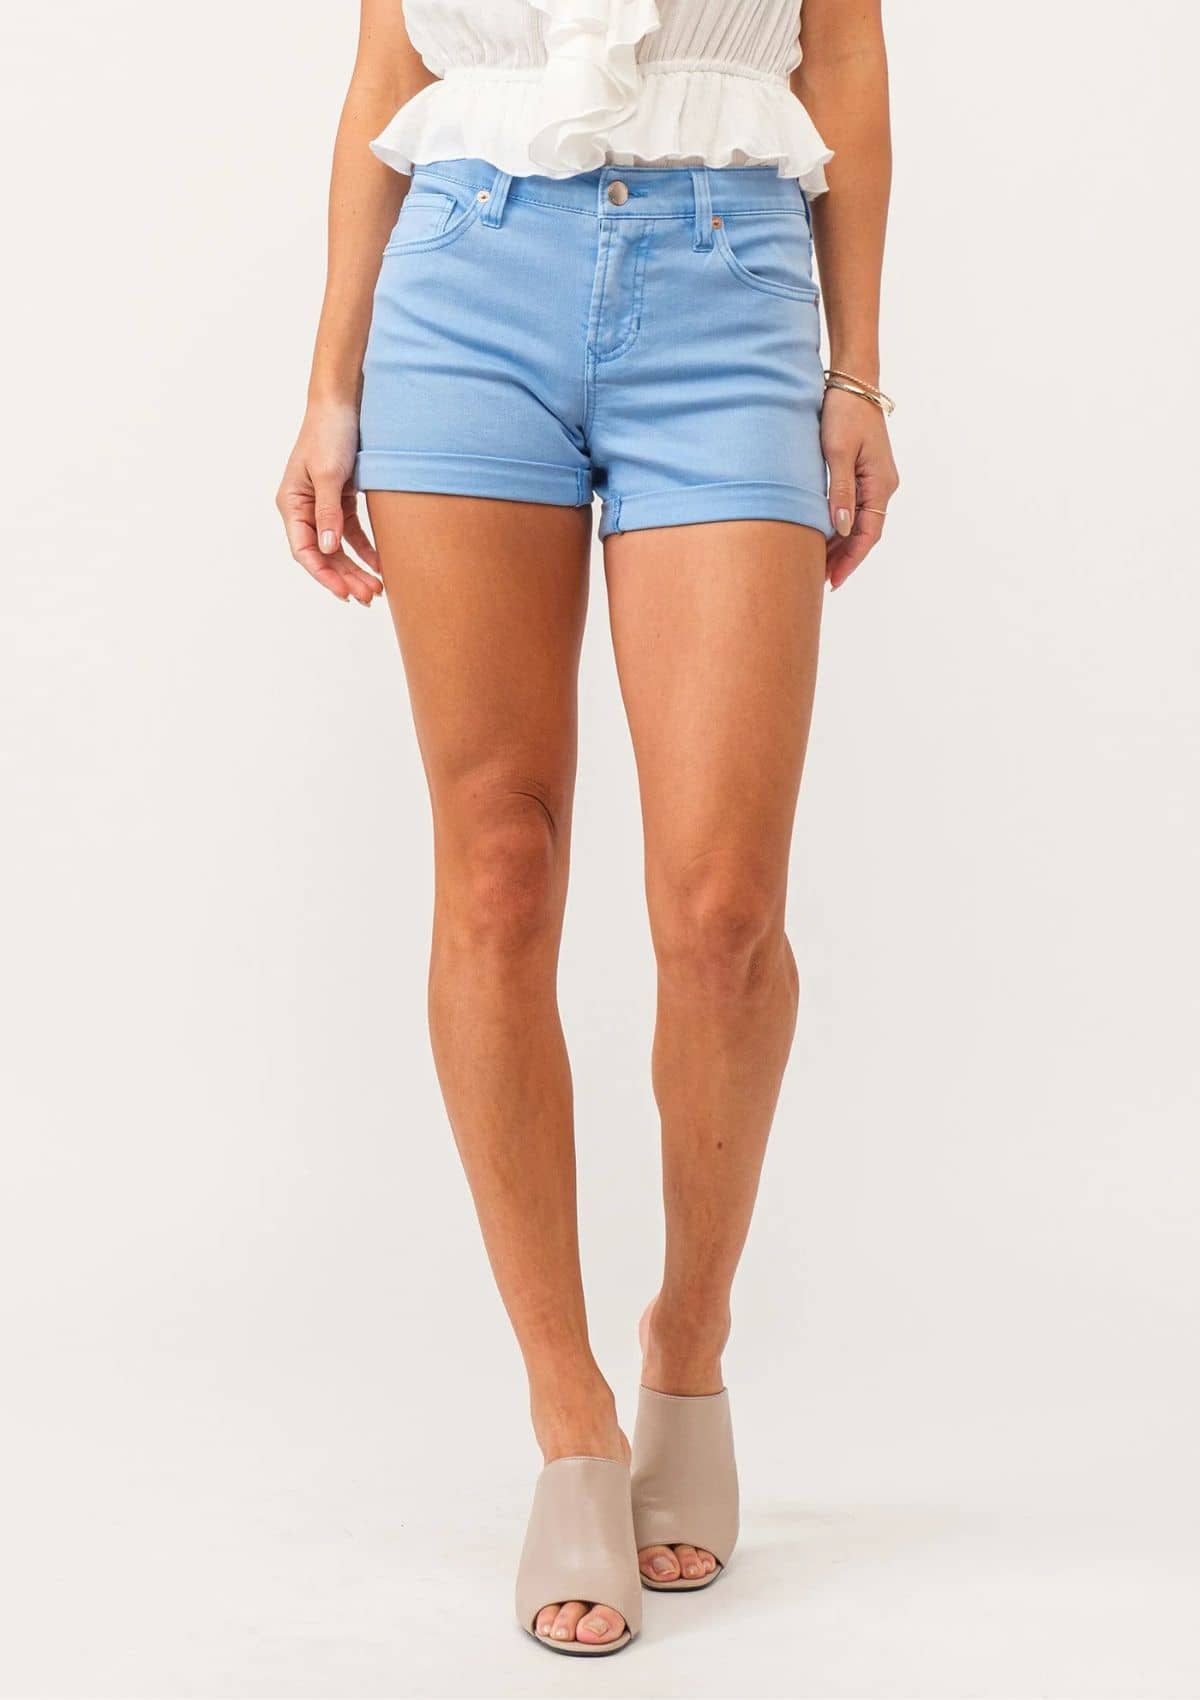 clothing-Fashion-jean shorts-Ruby Jane.